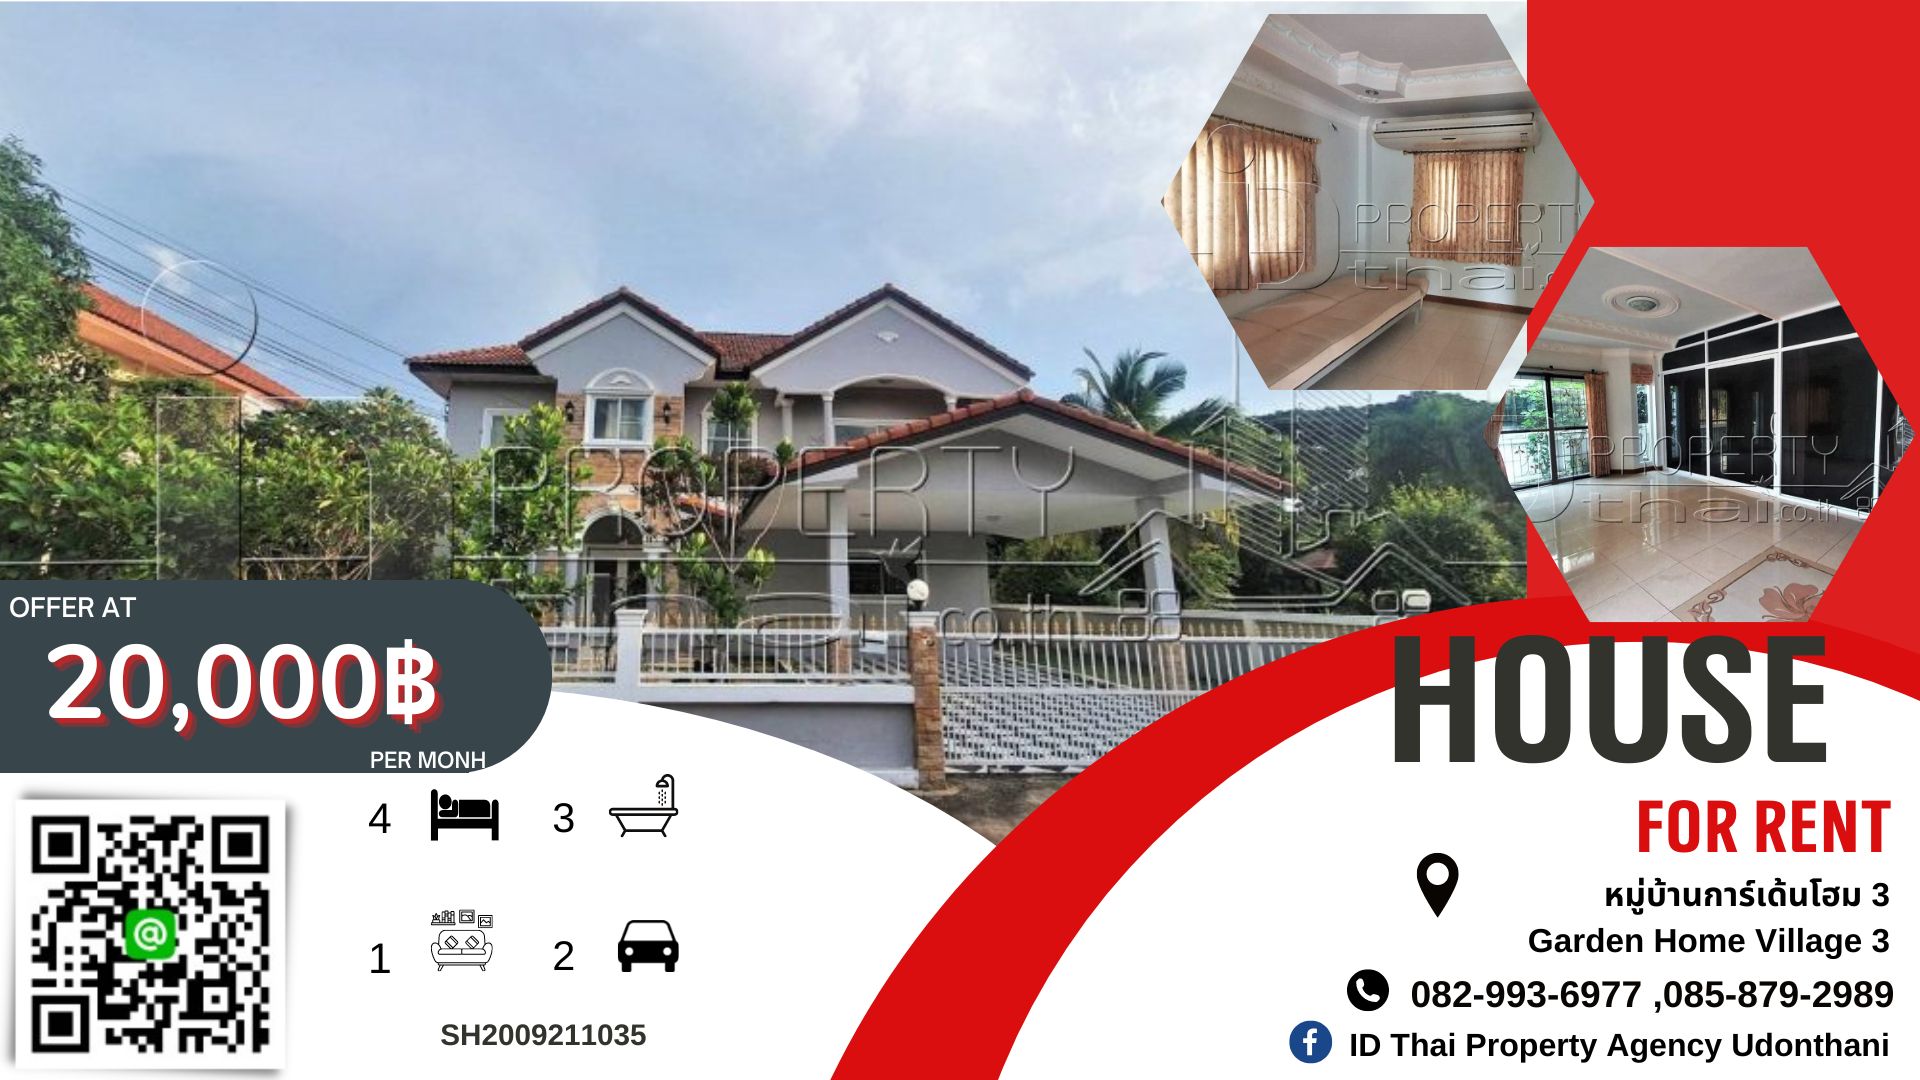 House For Rent In Udonthani – ให้เช่าบ้าน อุดรธานี